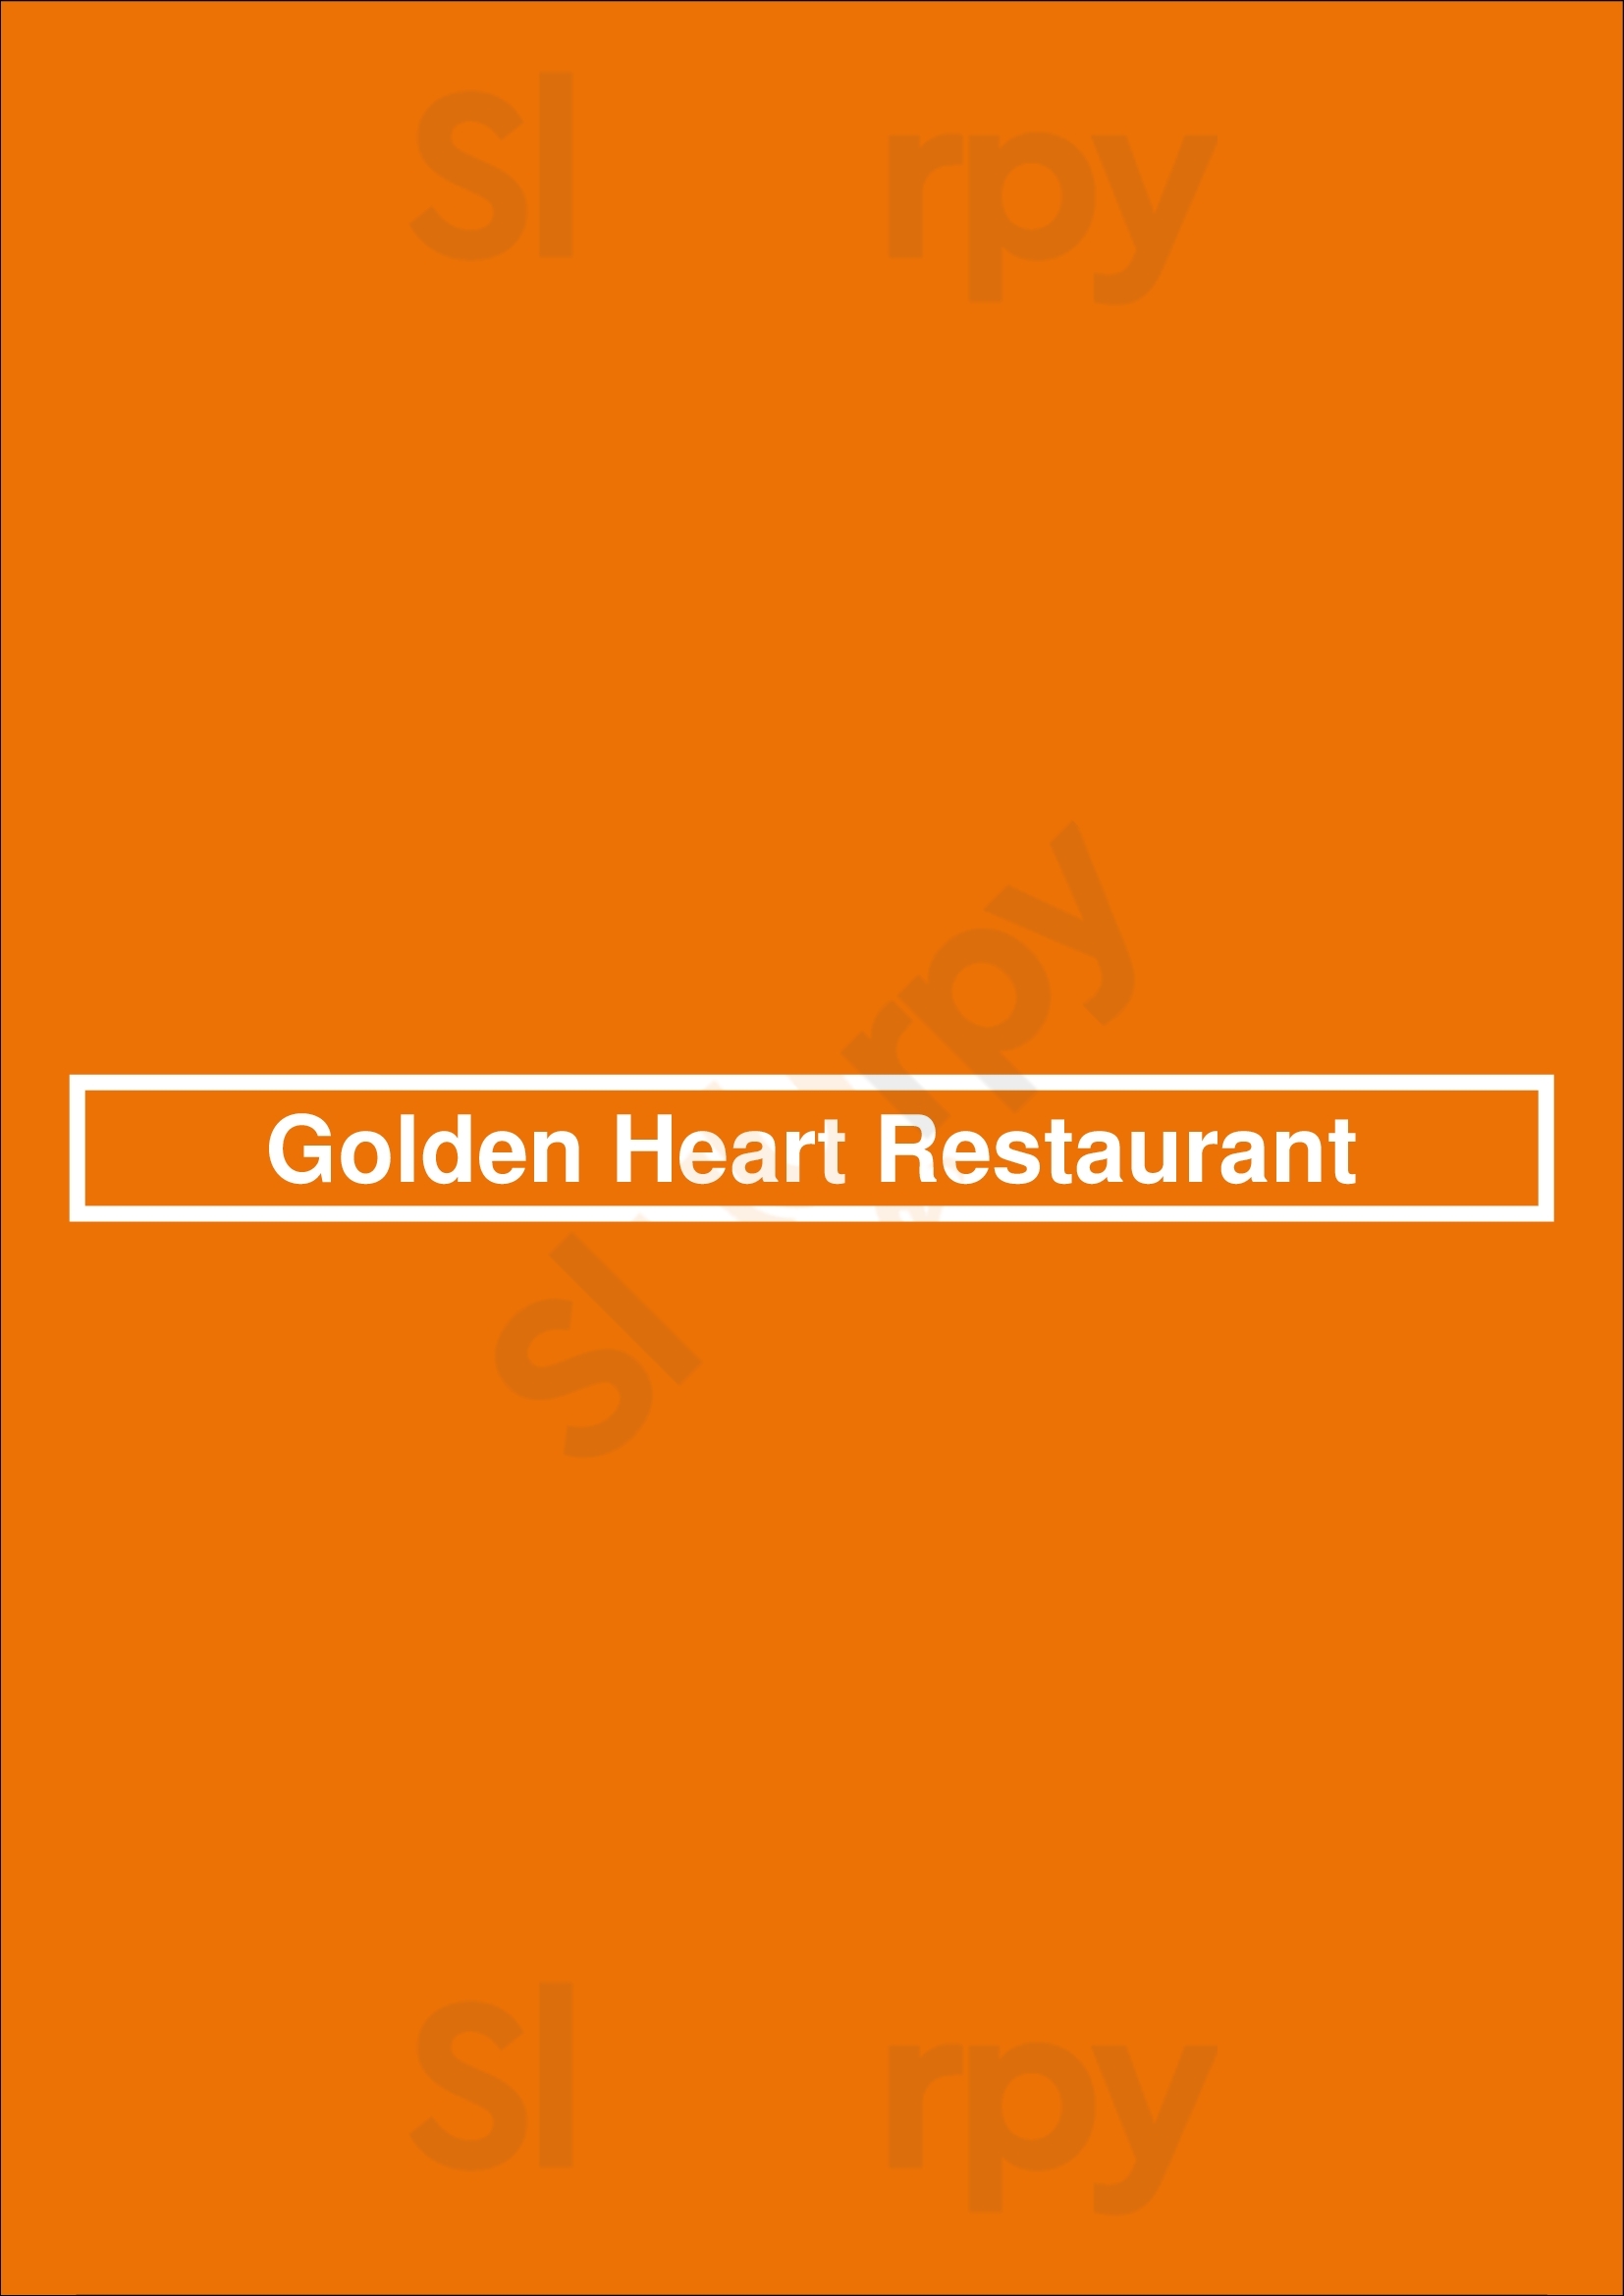 Golden Heart Restaurant Chicago Menu - 1